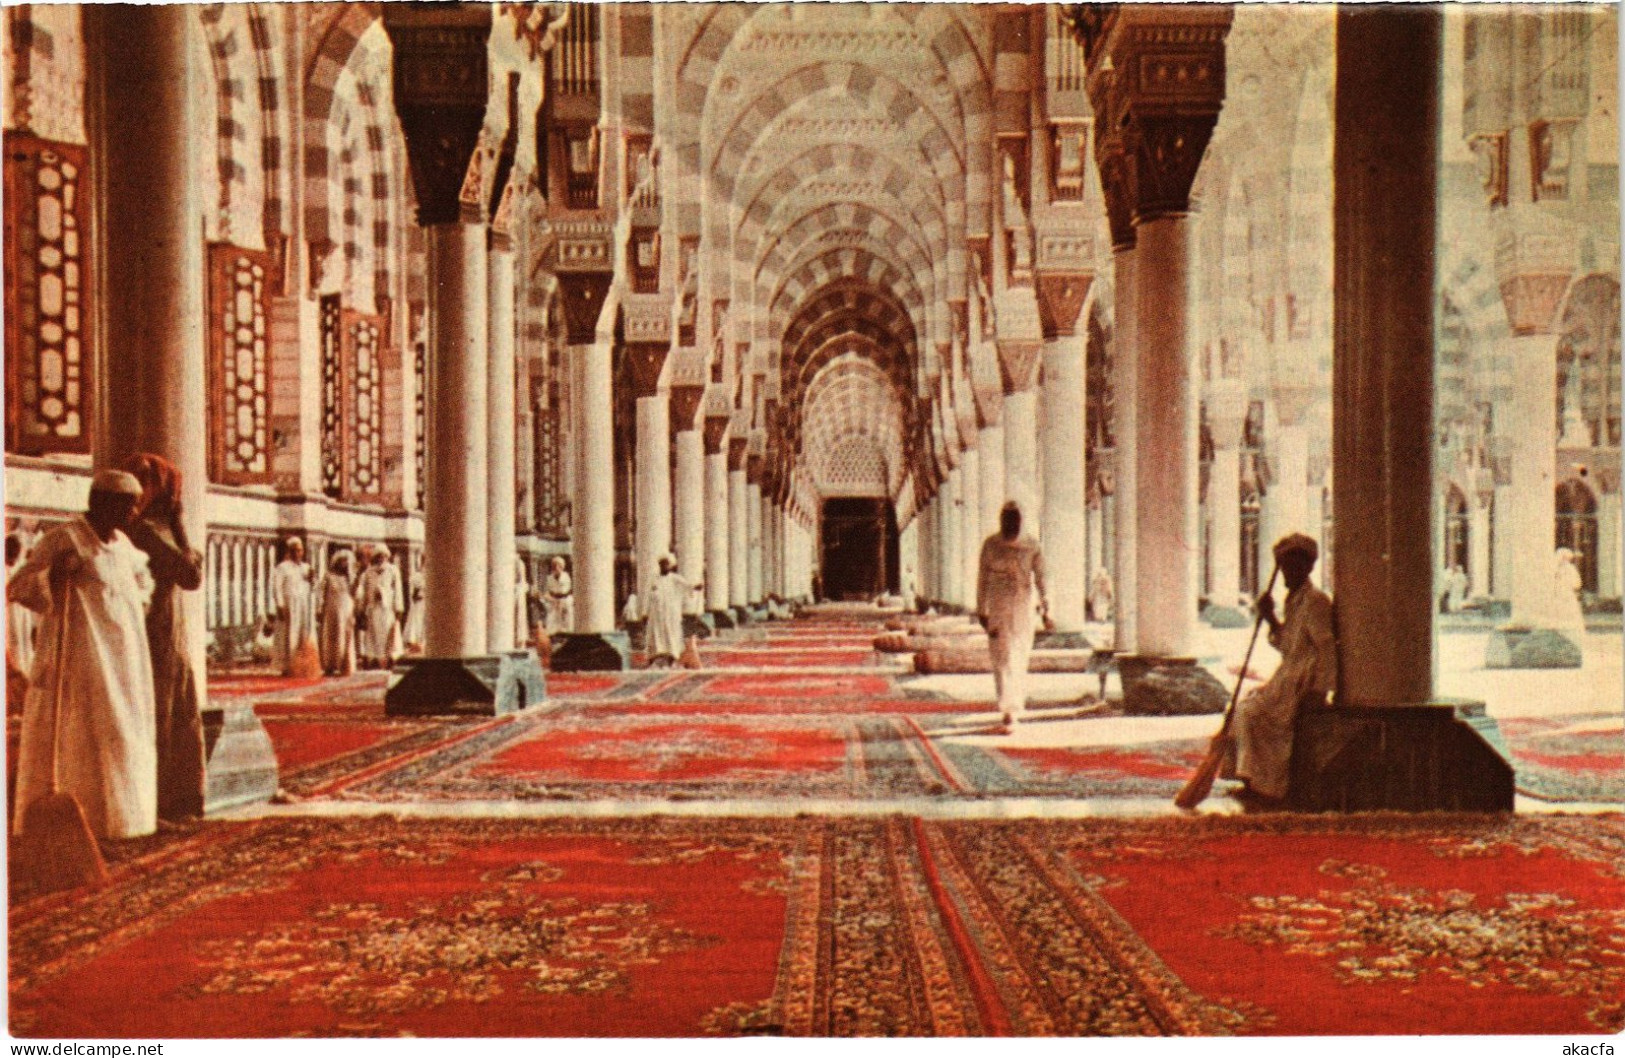 CPM Medina Prophet's Holy Mosque SAUDI ARABIA (1182970) - Arabie Saoudite